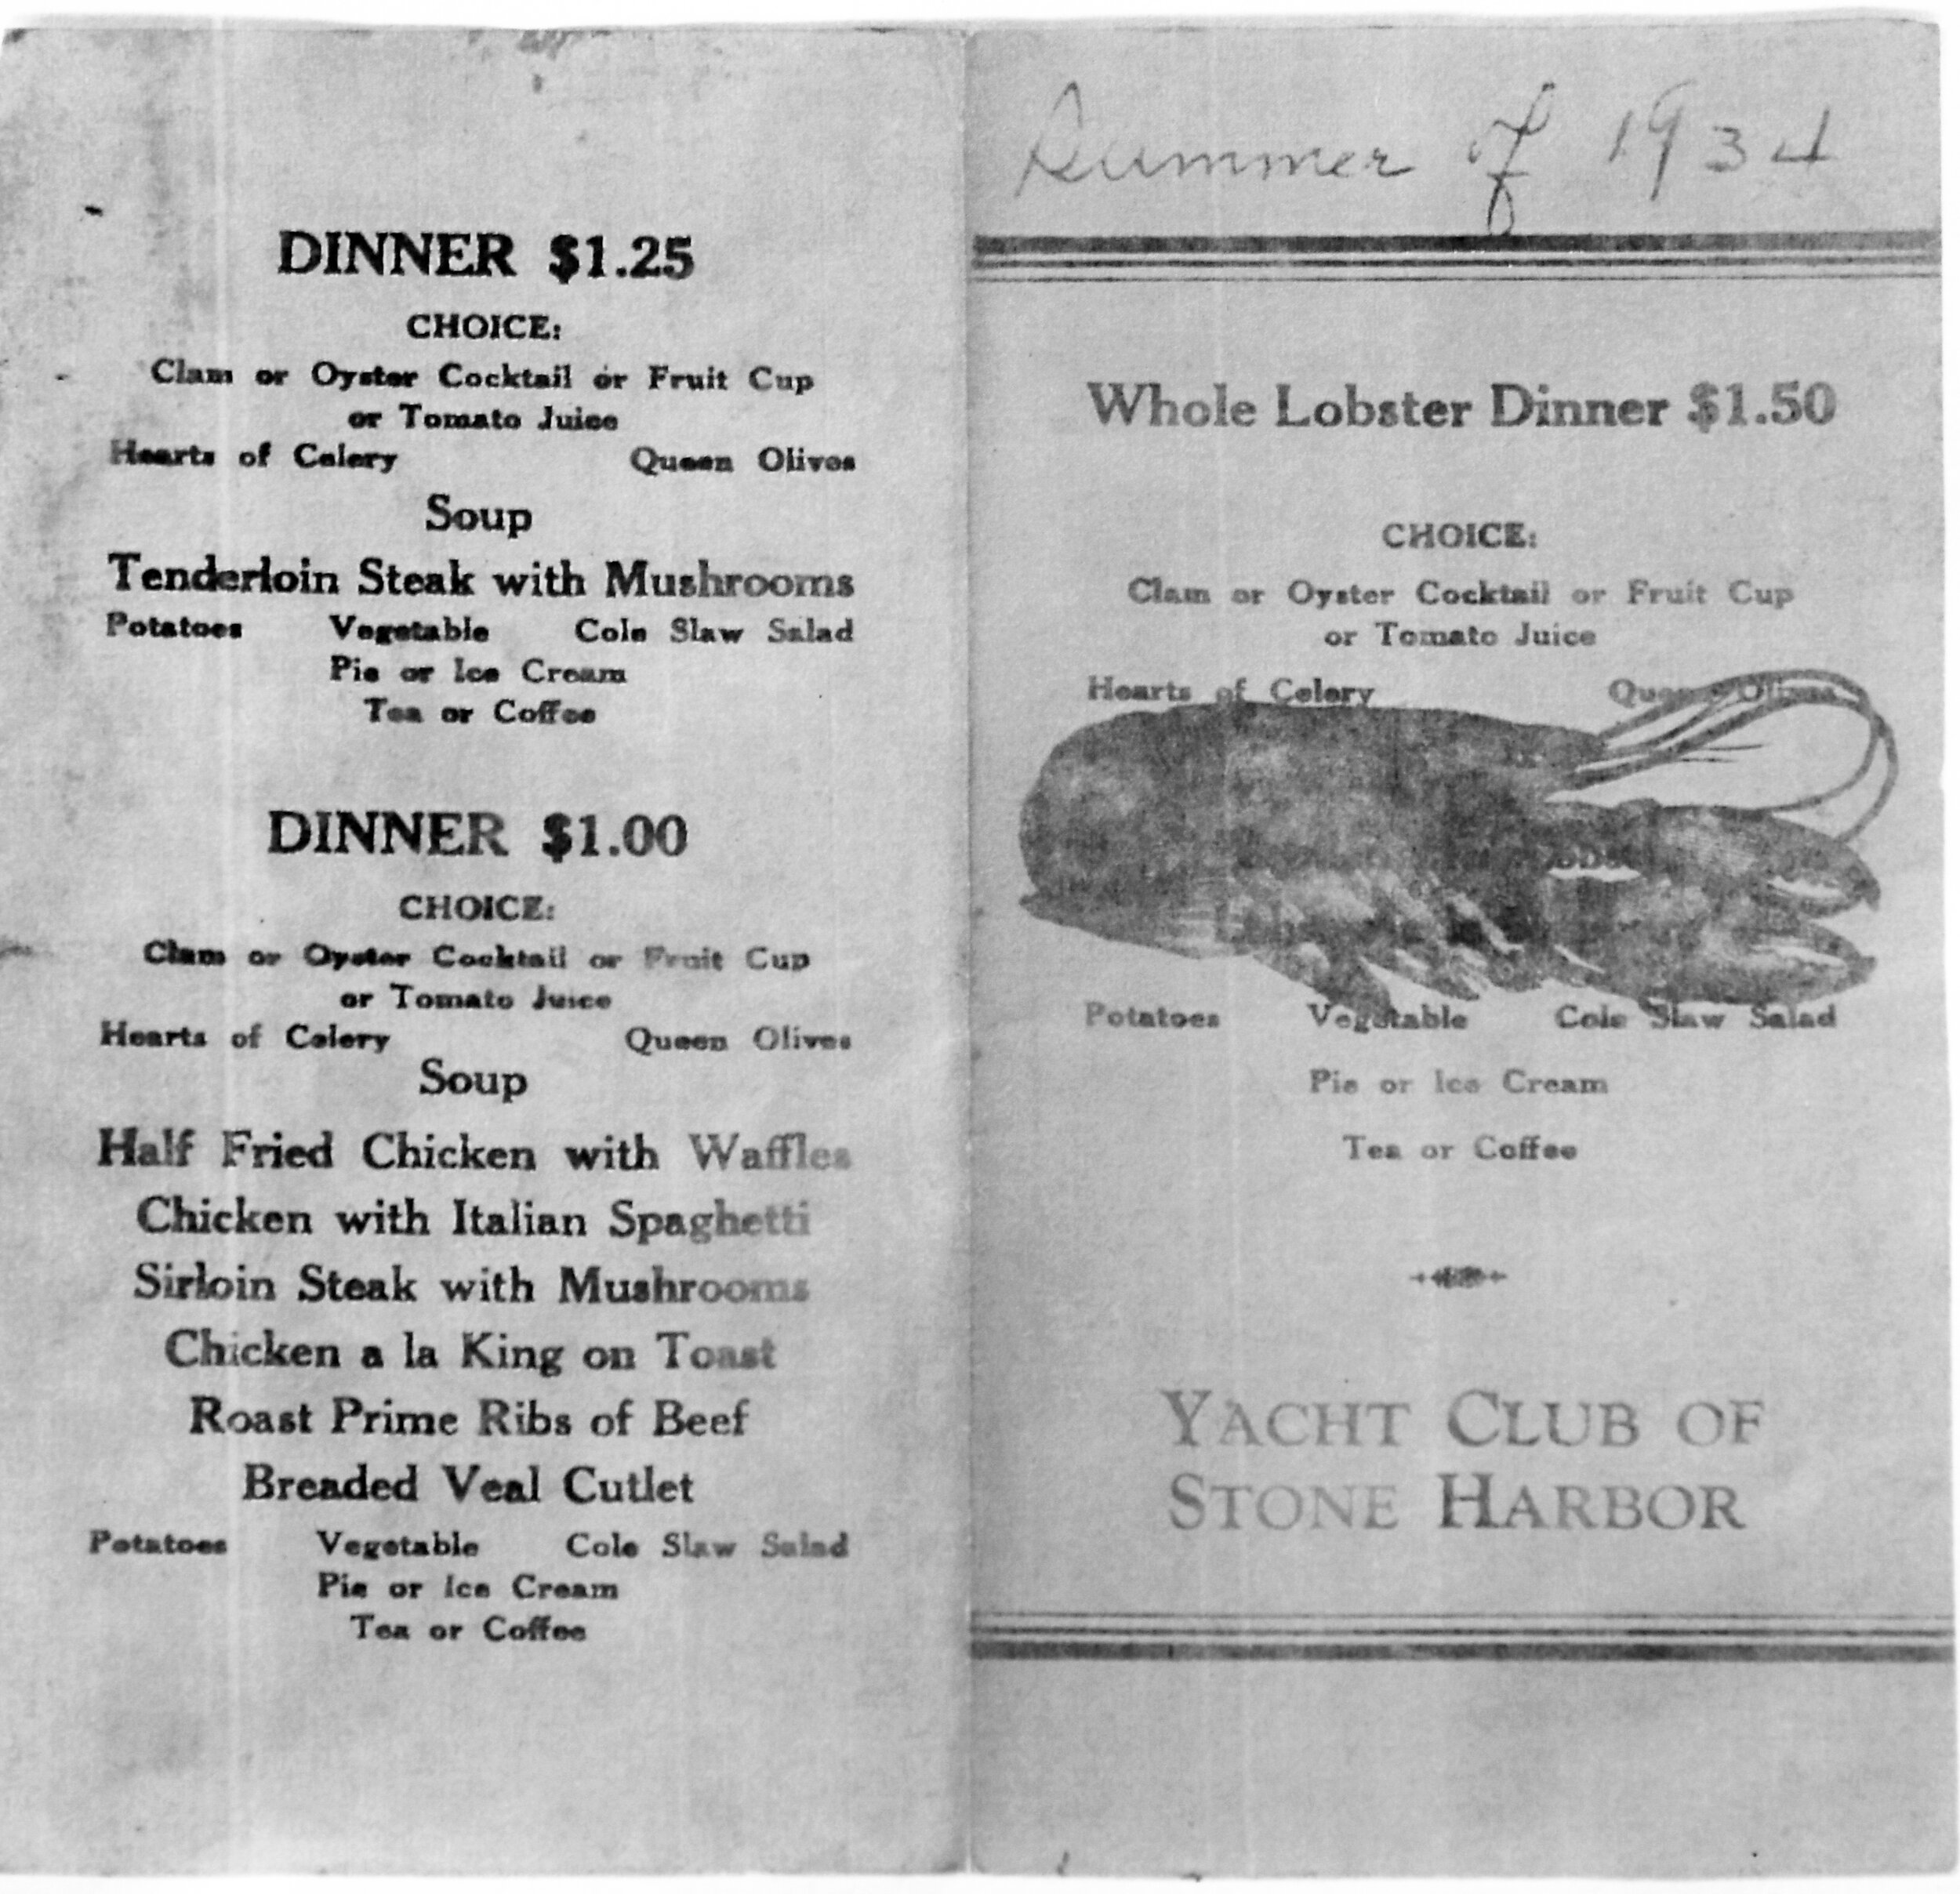 stone harbor yacht club menu with prices